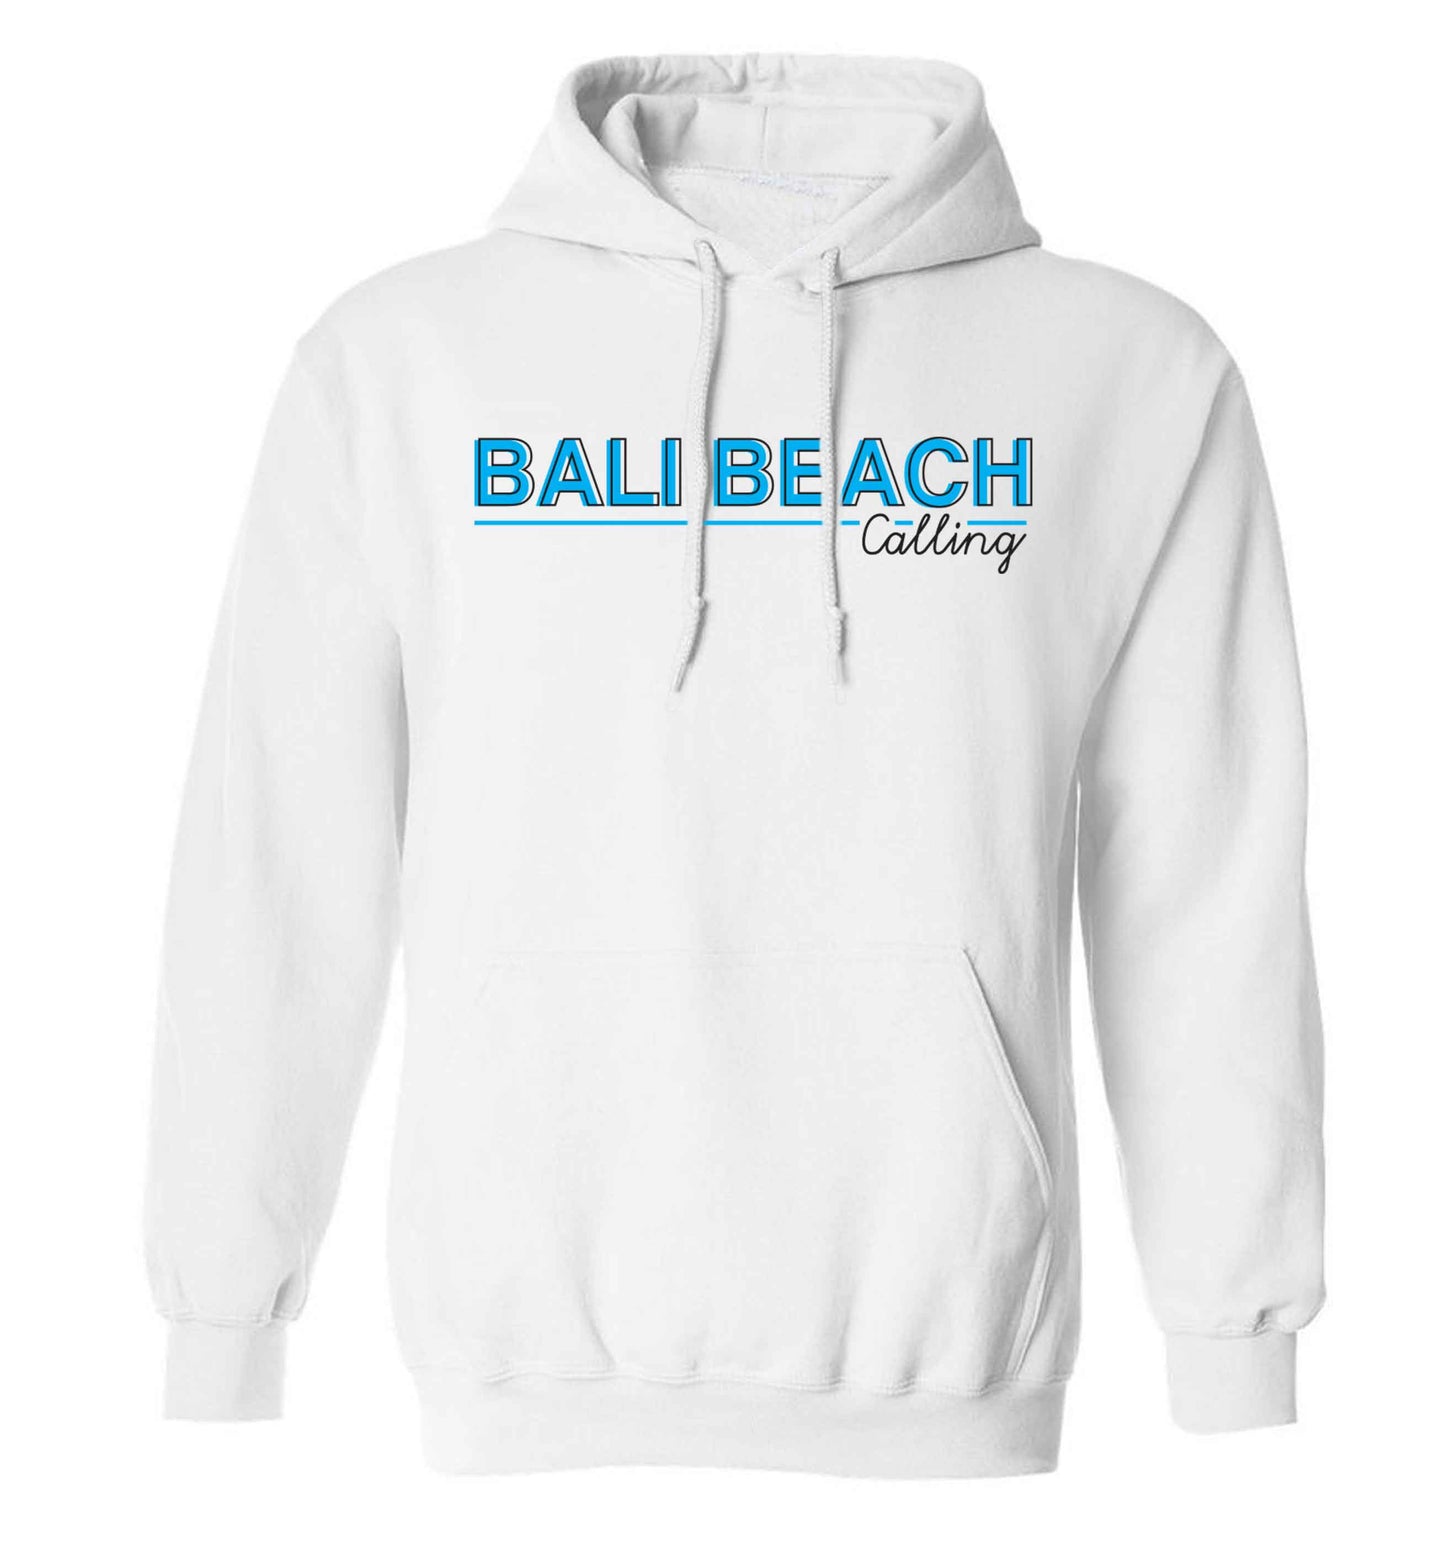 Bali beach calling adults unisex white hoodie 2XL